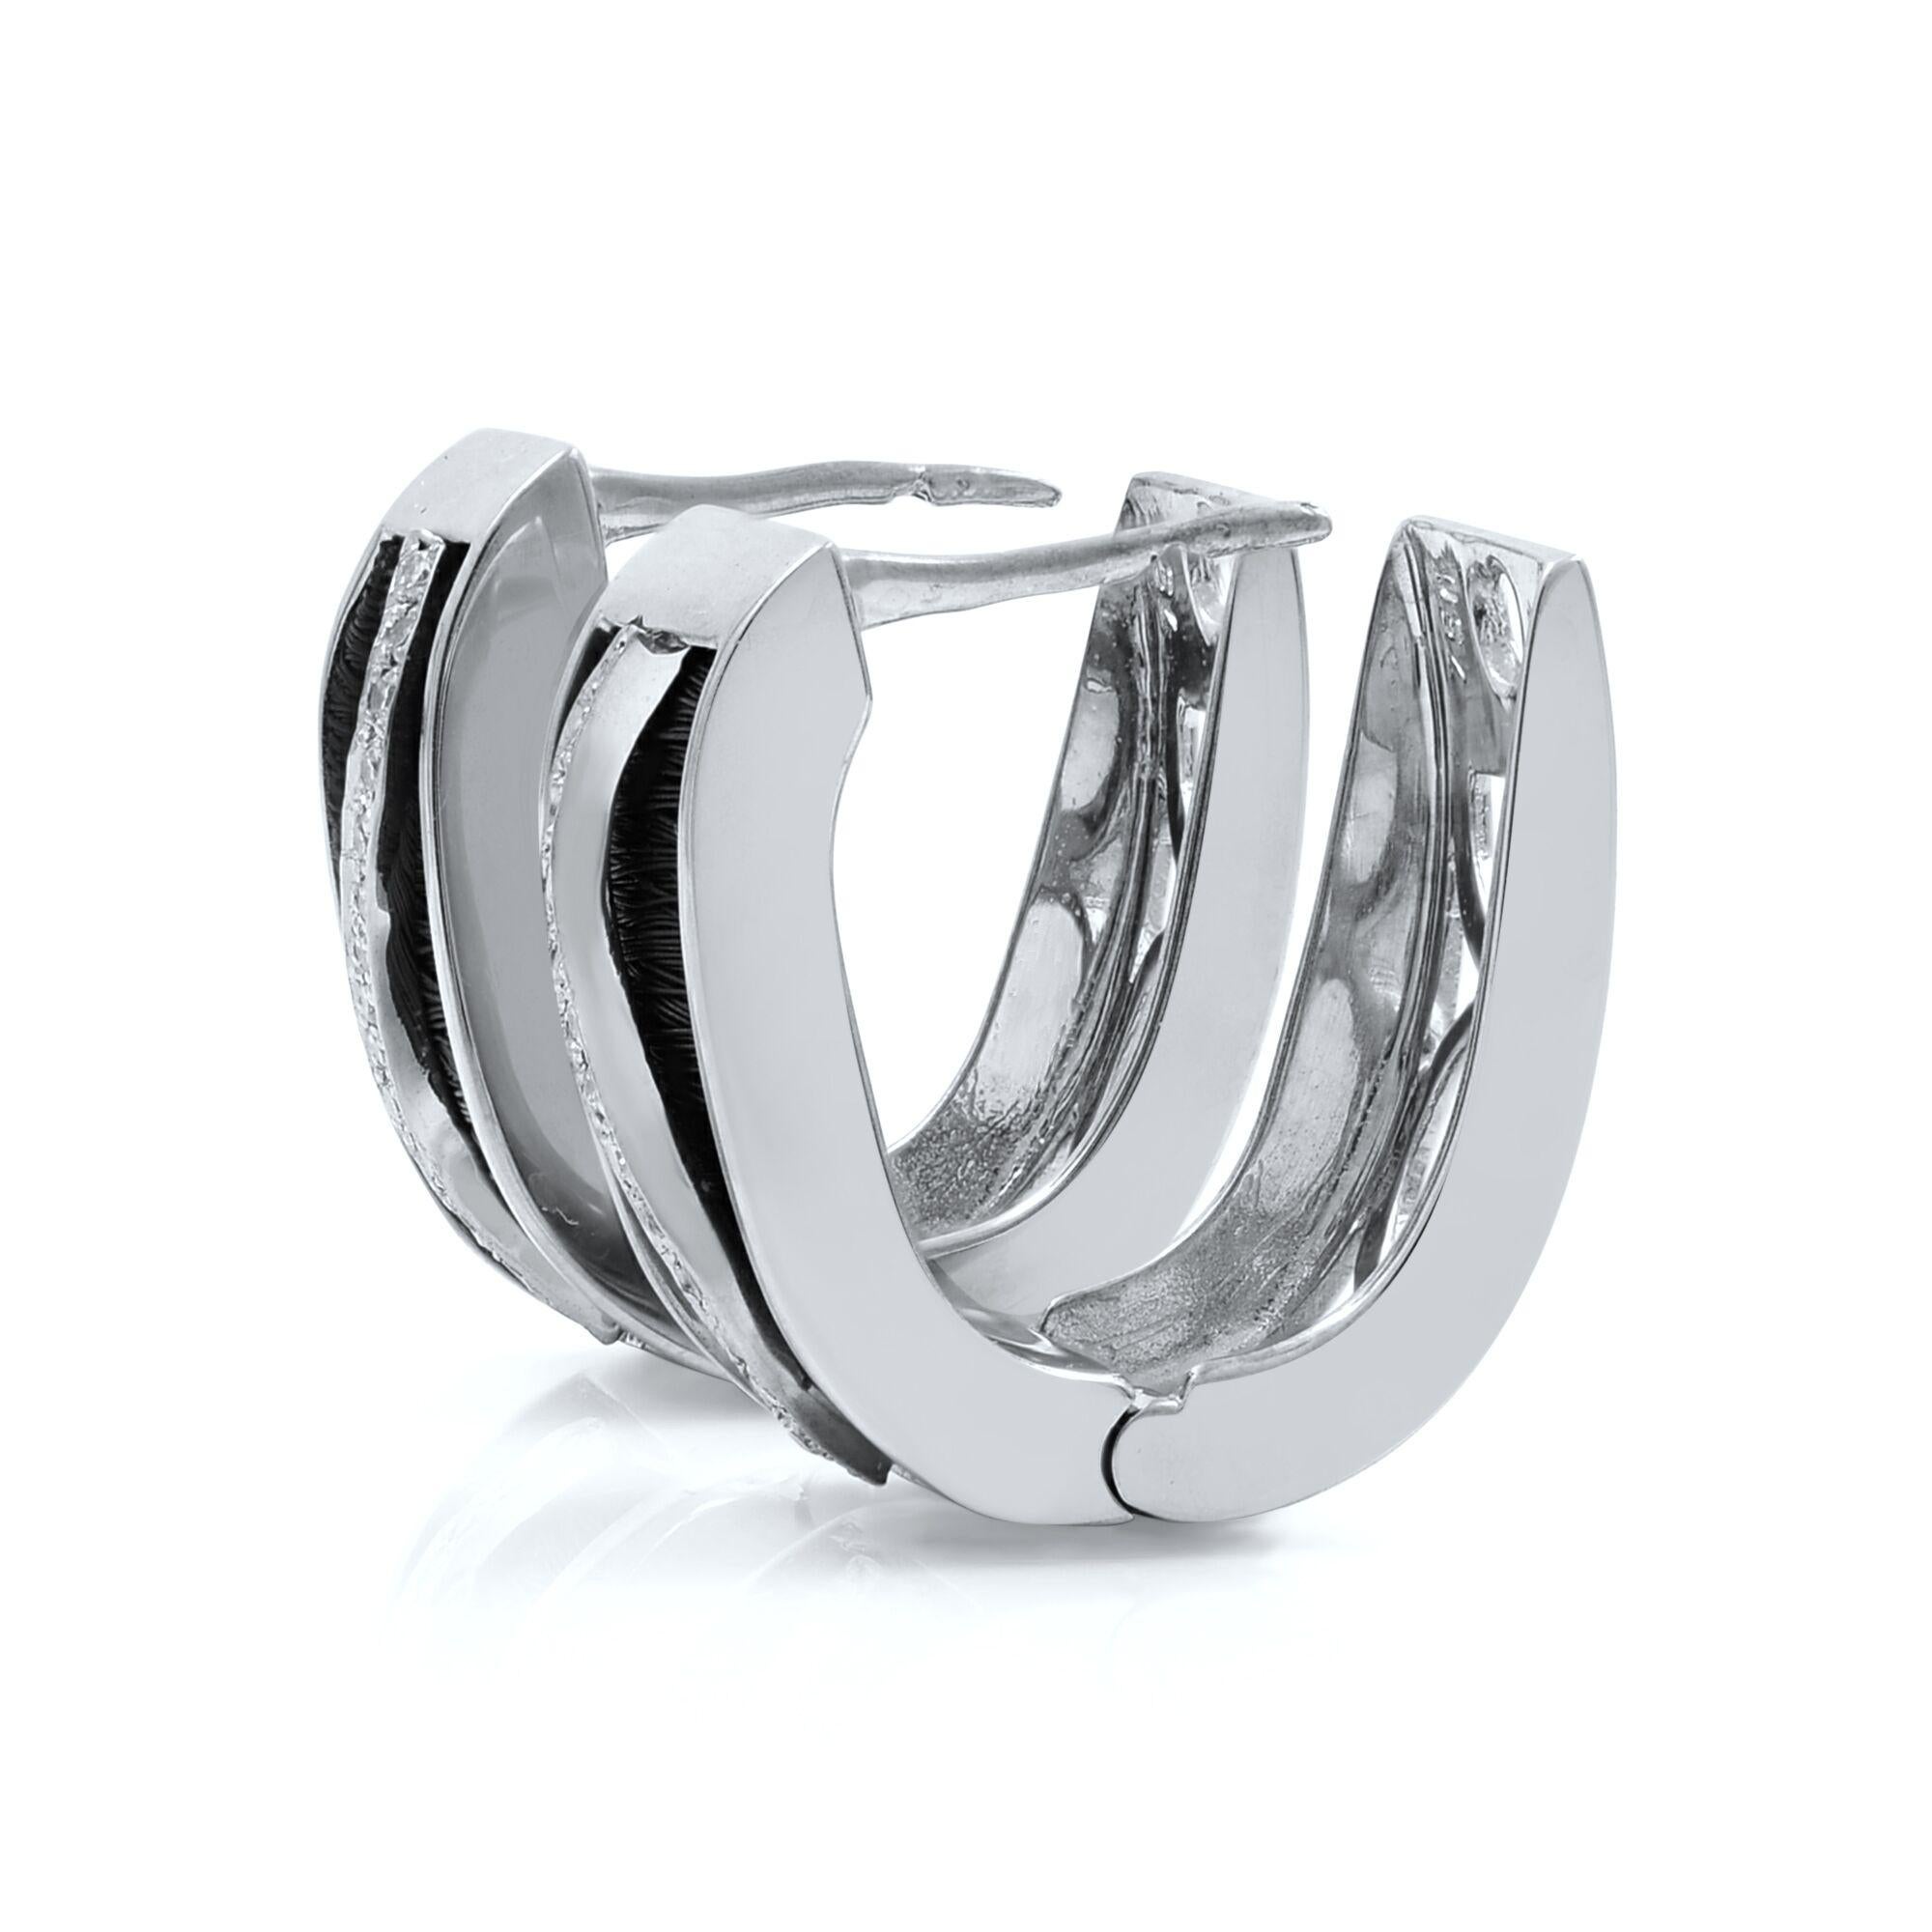 Rachel Koen Round Cut Diamond Bangle Ring and Earring Set 18K White Gold 0.60ctw For Sale 1